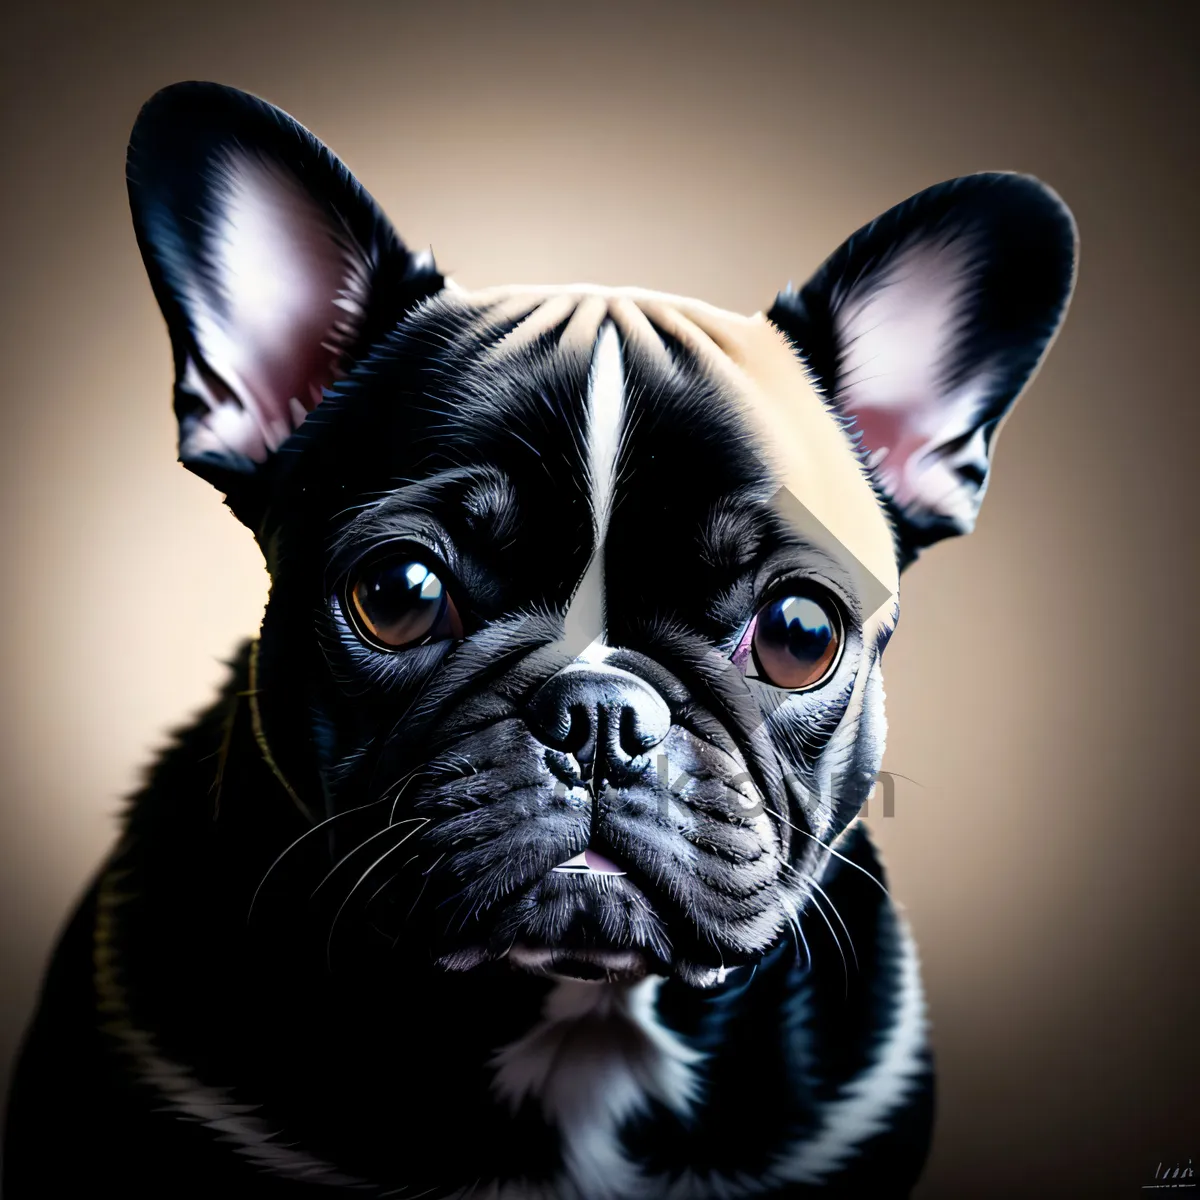 Picture of Adorable Bulldog Terrier Posing for Studio Portrait